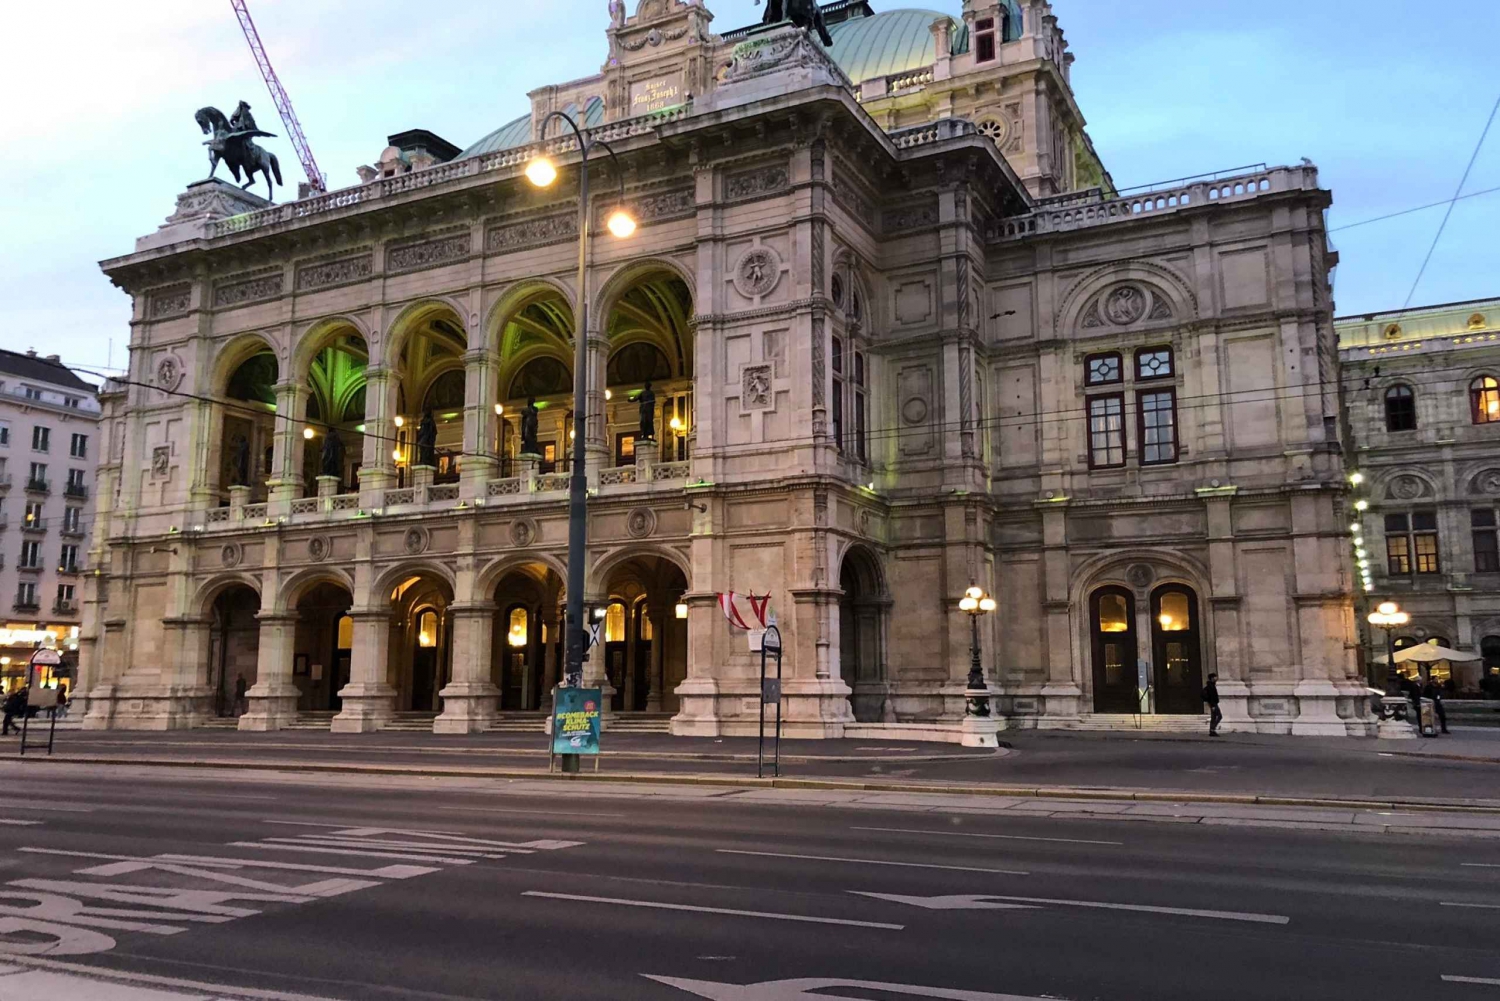 Wien Ringstasse - selvguidet vandretur og skattejagt